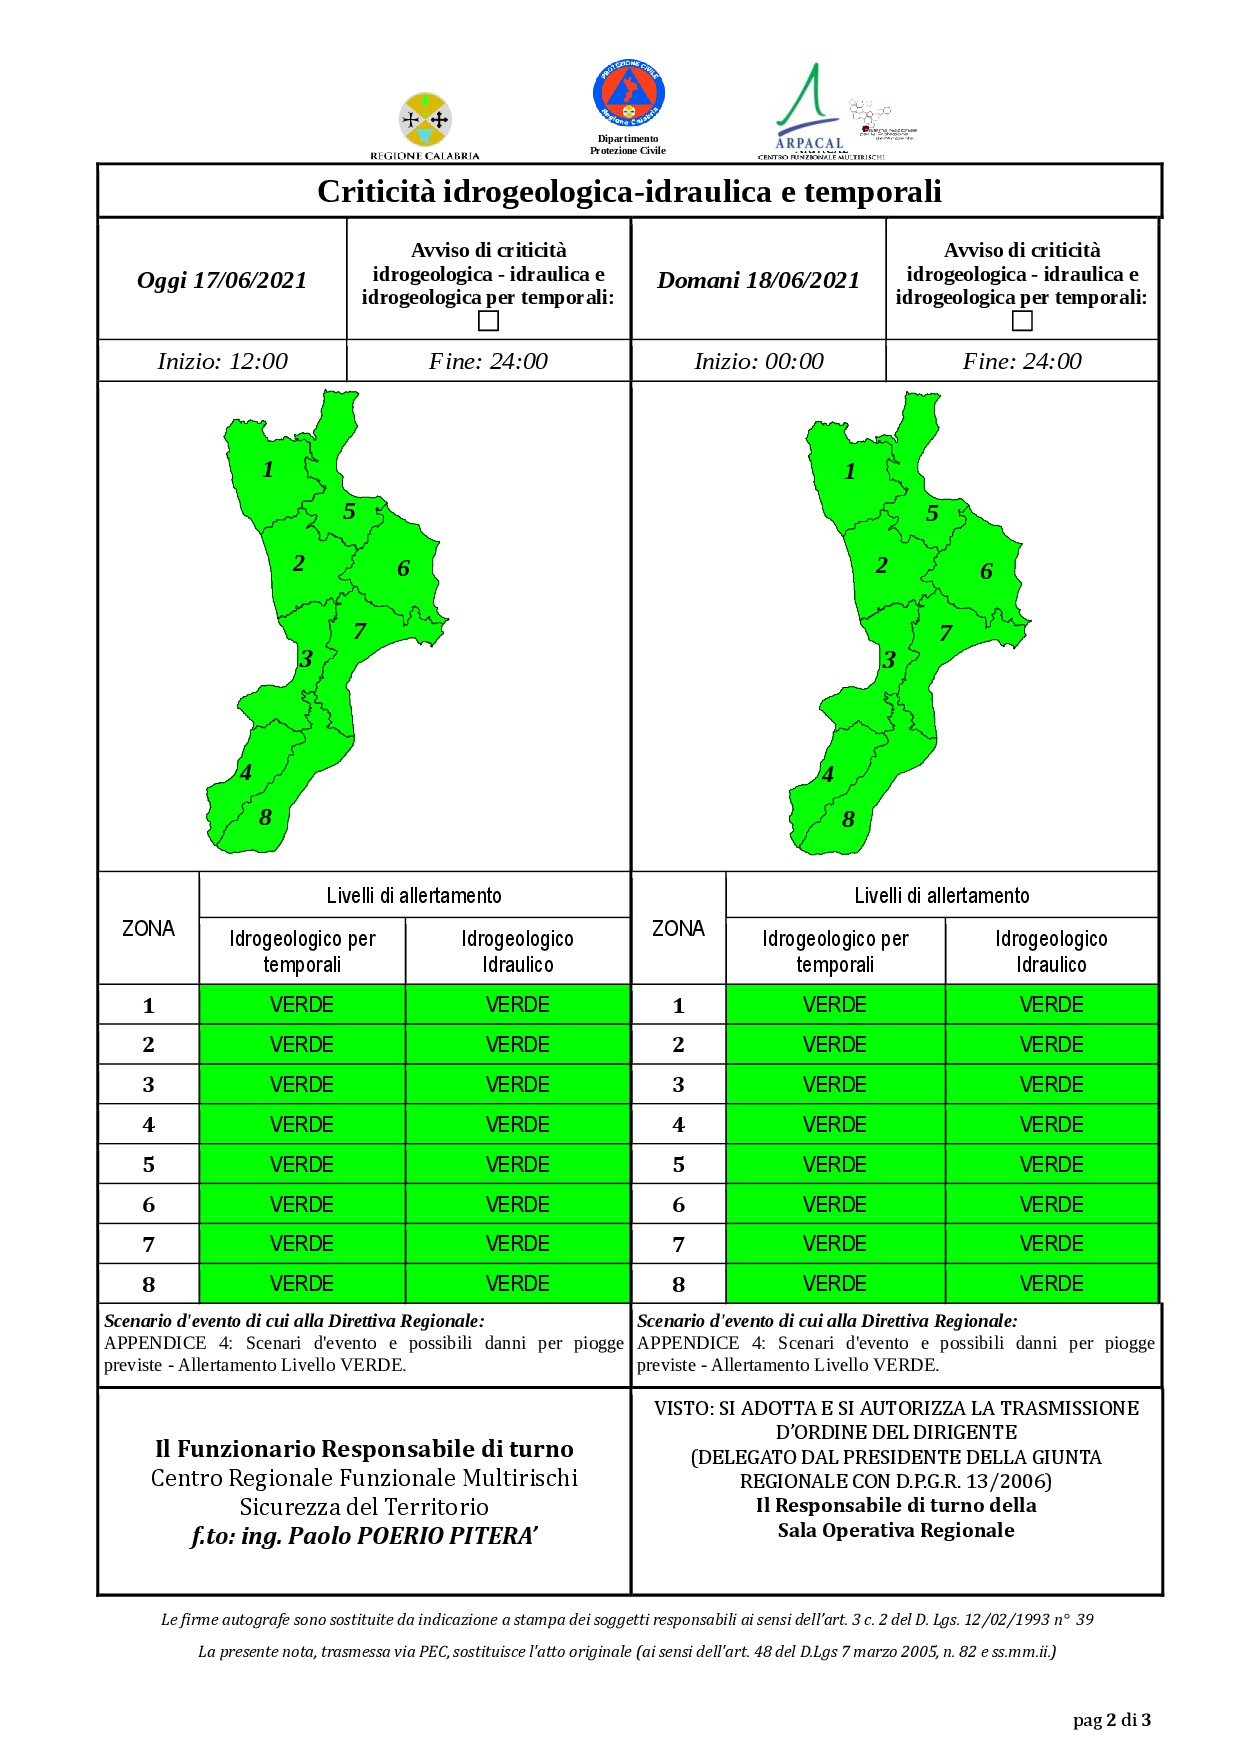 Criticità idrogeologica-idraulica e temporali in Calabria 17-06-2021